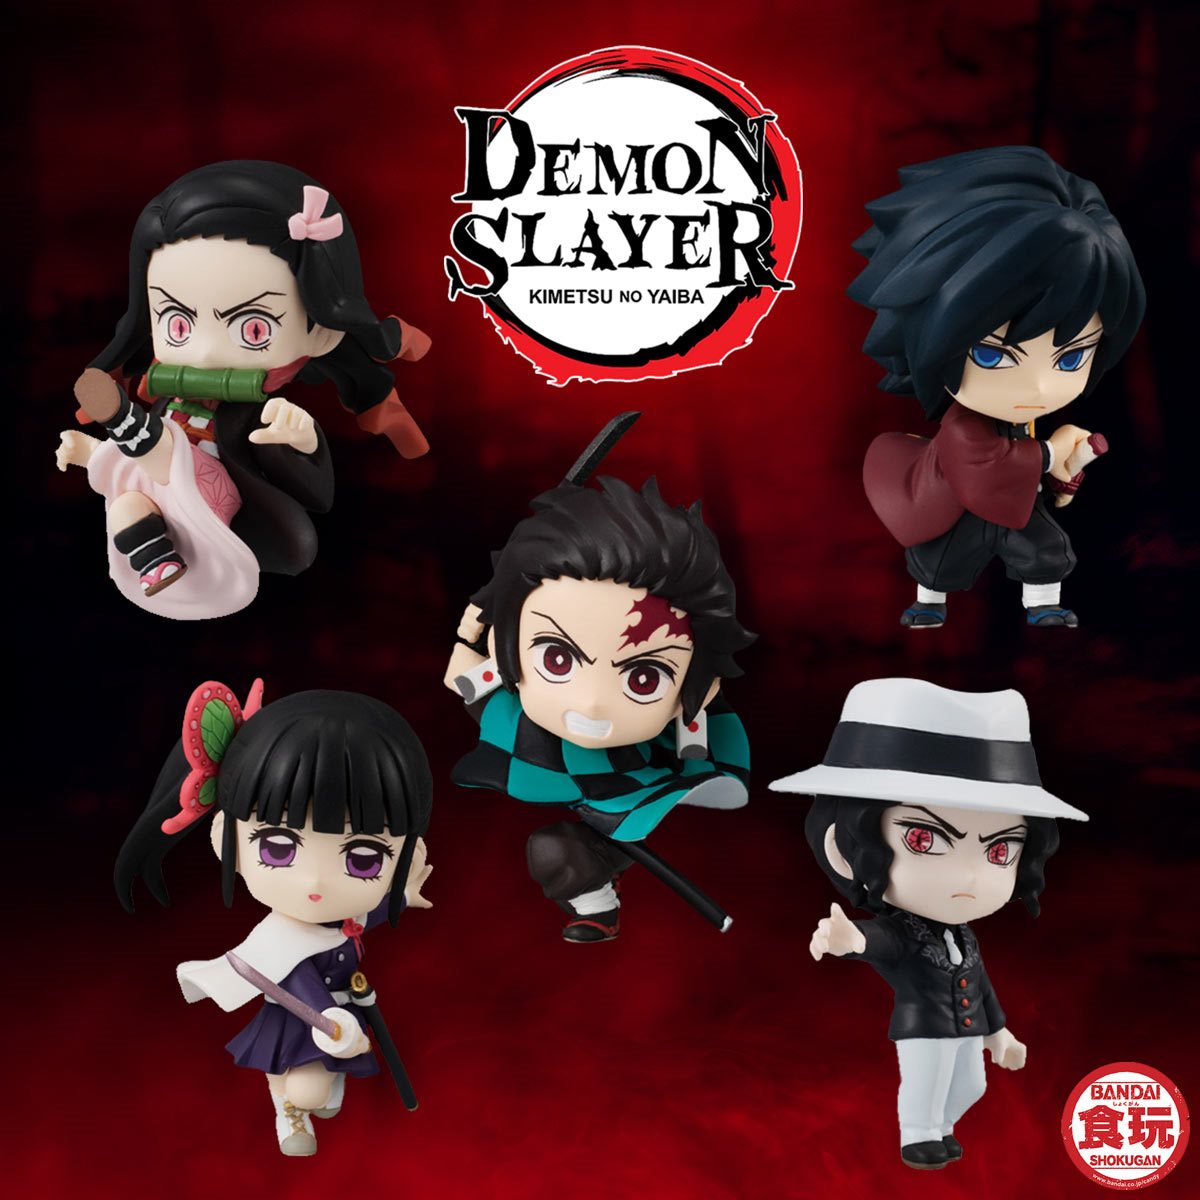 Demon Slayer: Kimetsu no Yaiba ADVERGE MOTION 2 10Pack BOX (CANDY TOY)